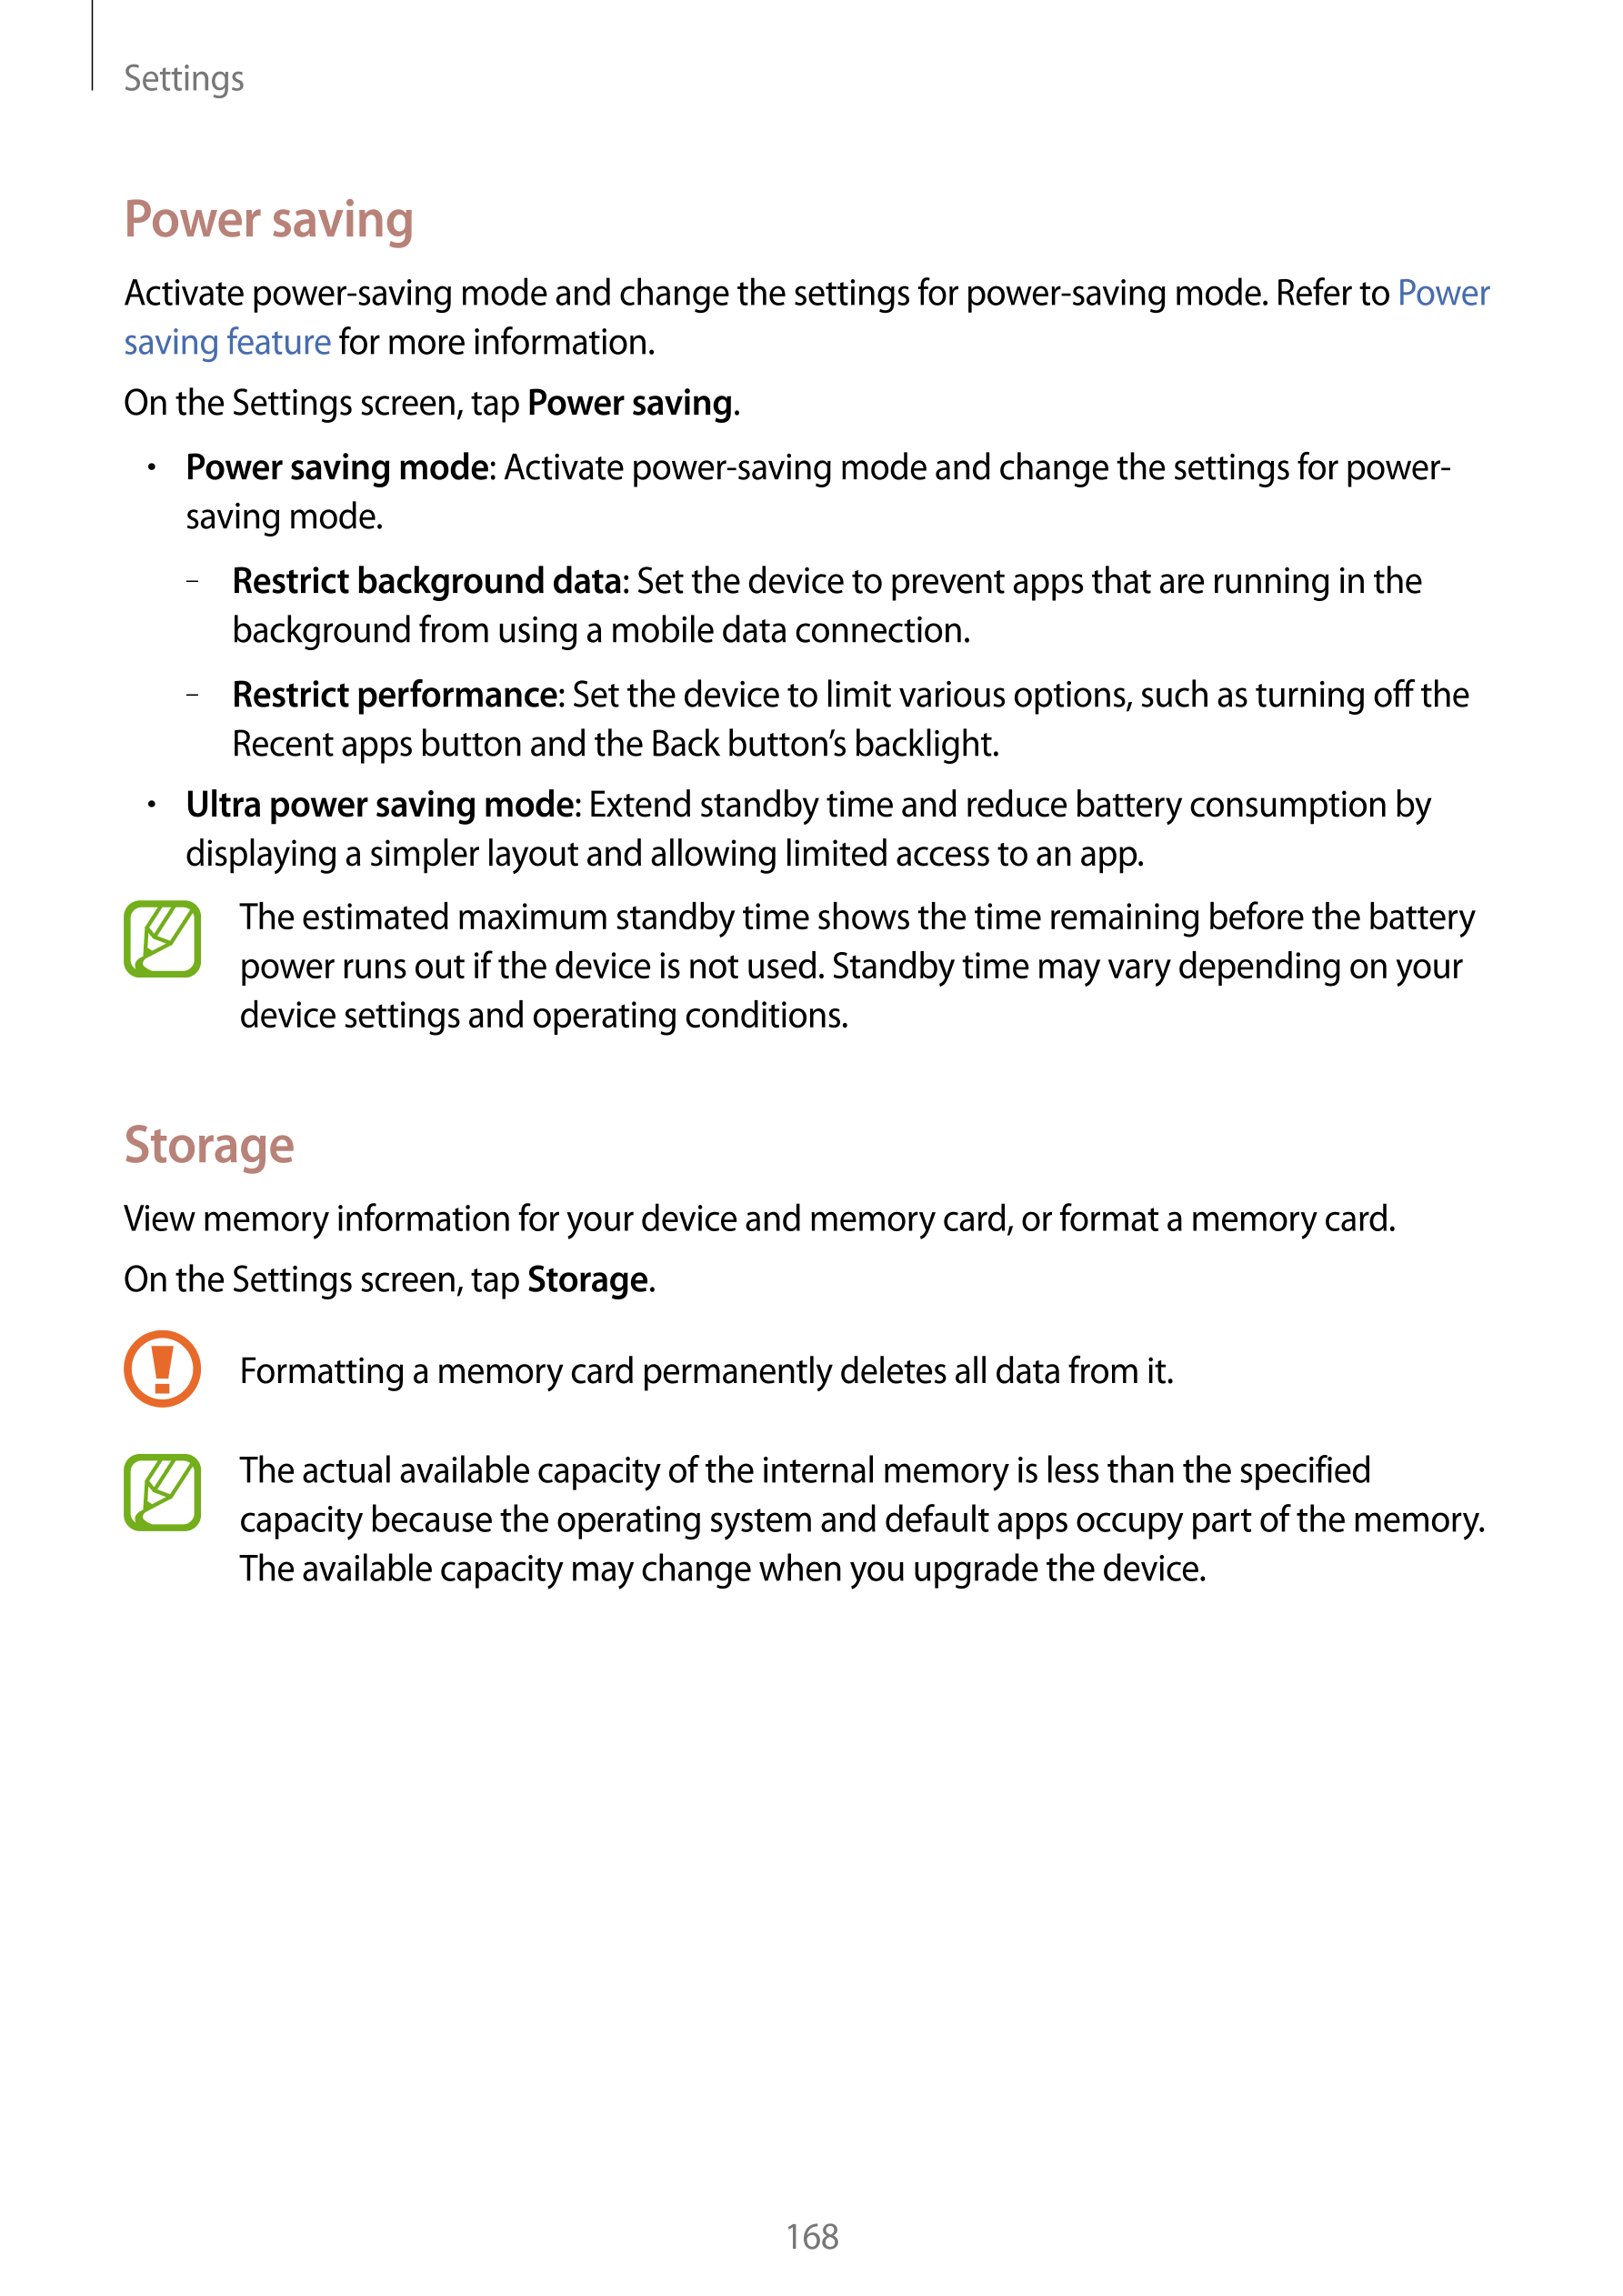 Settings
Power saving
Activate power-saving mode and change the settings for power-saving mode. Refer to  Power 
saving feature 